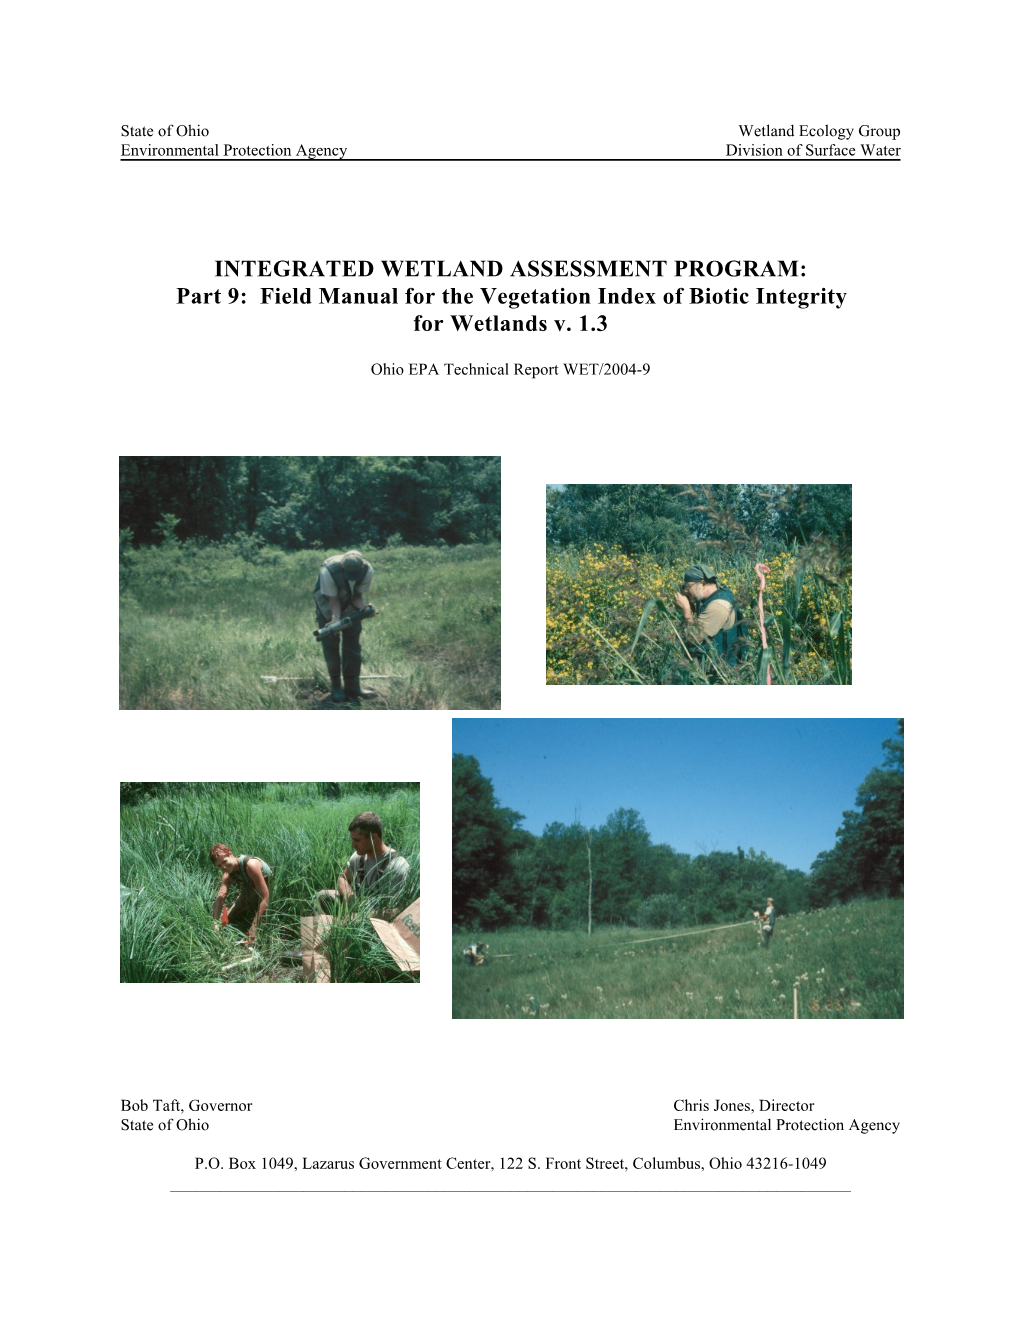 Field Manual for the Vegetation Index of Biotic Integrity for Wetlands V. 1.3